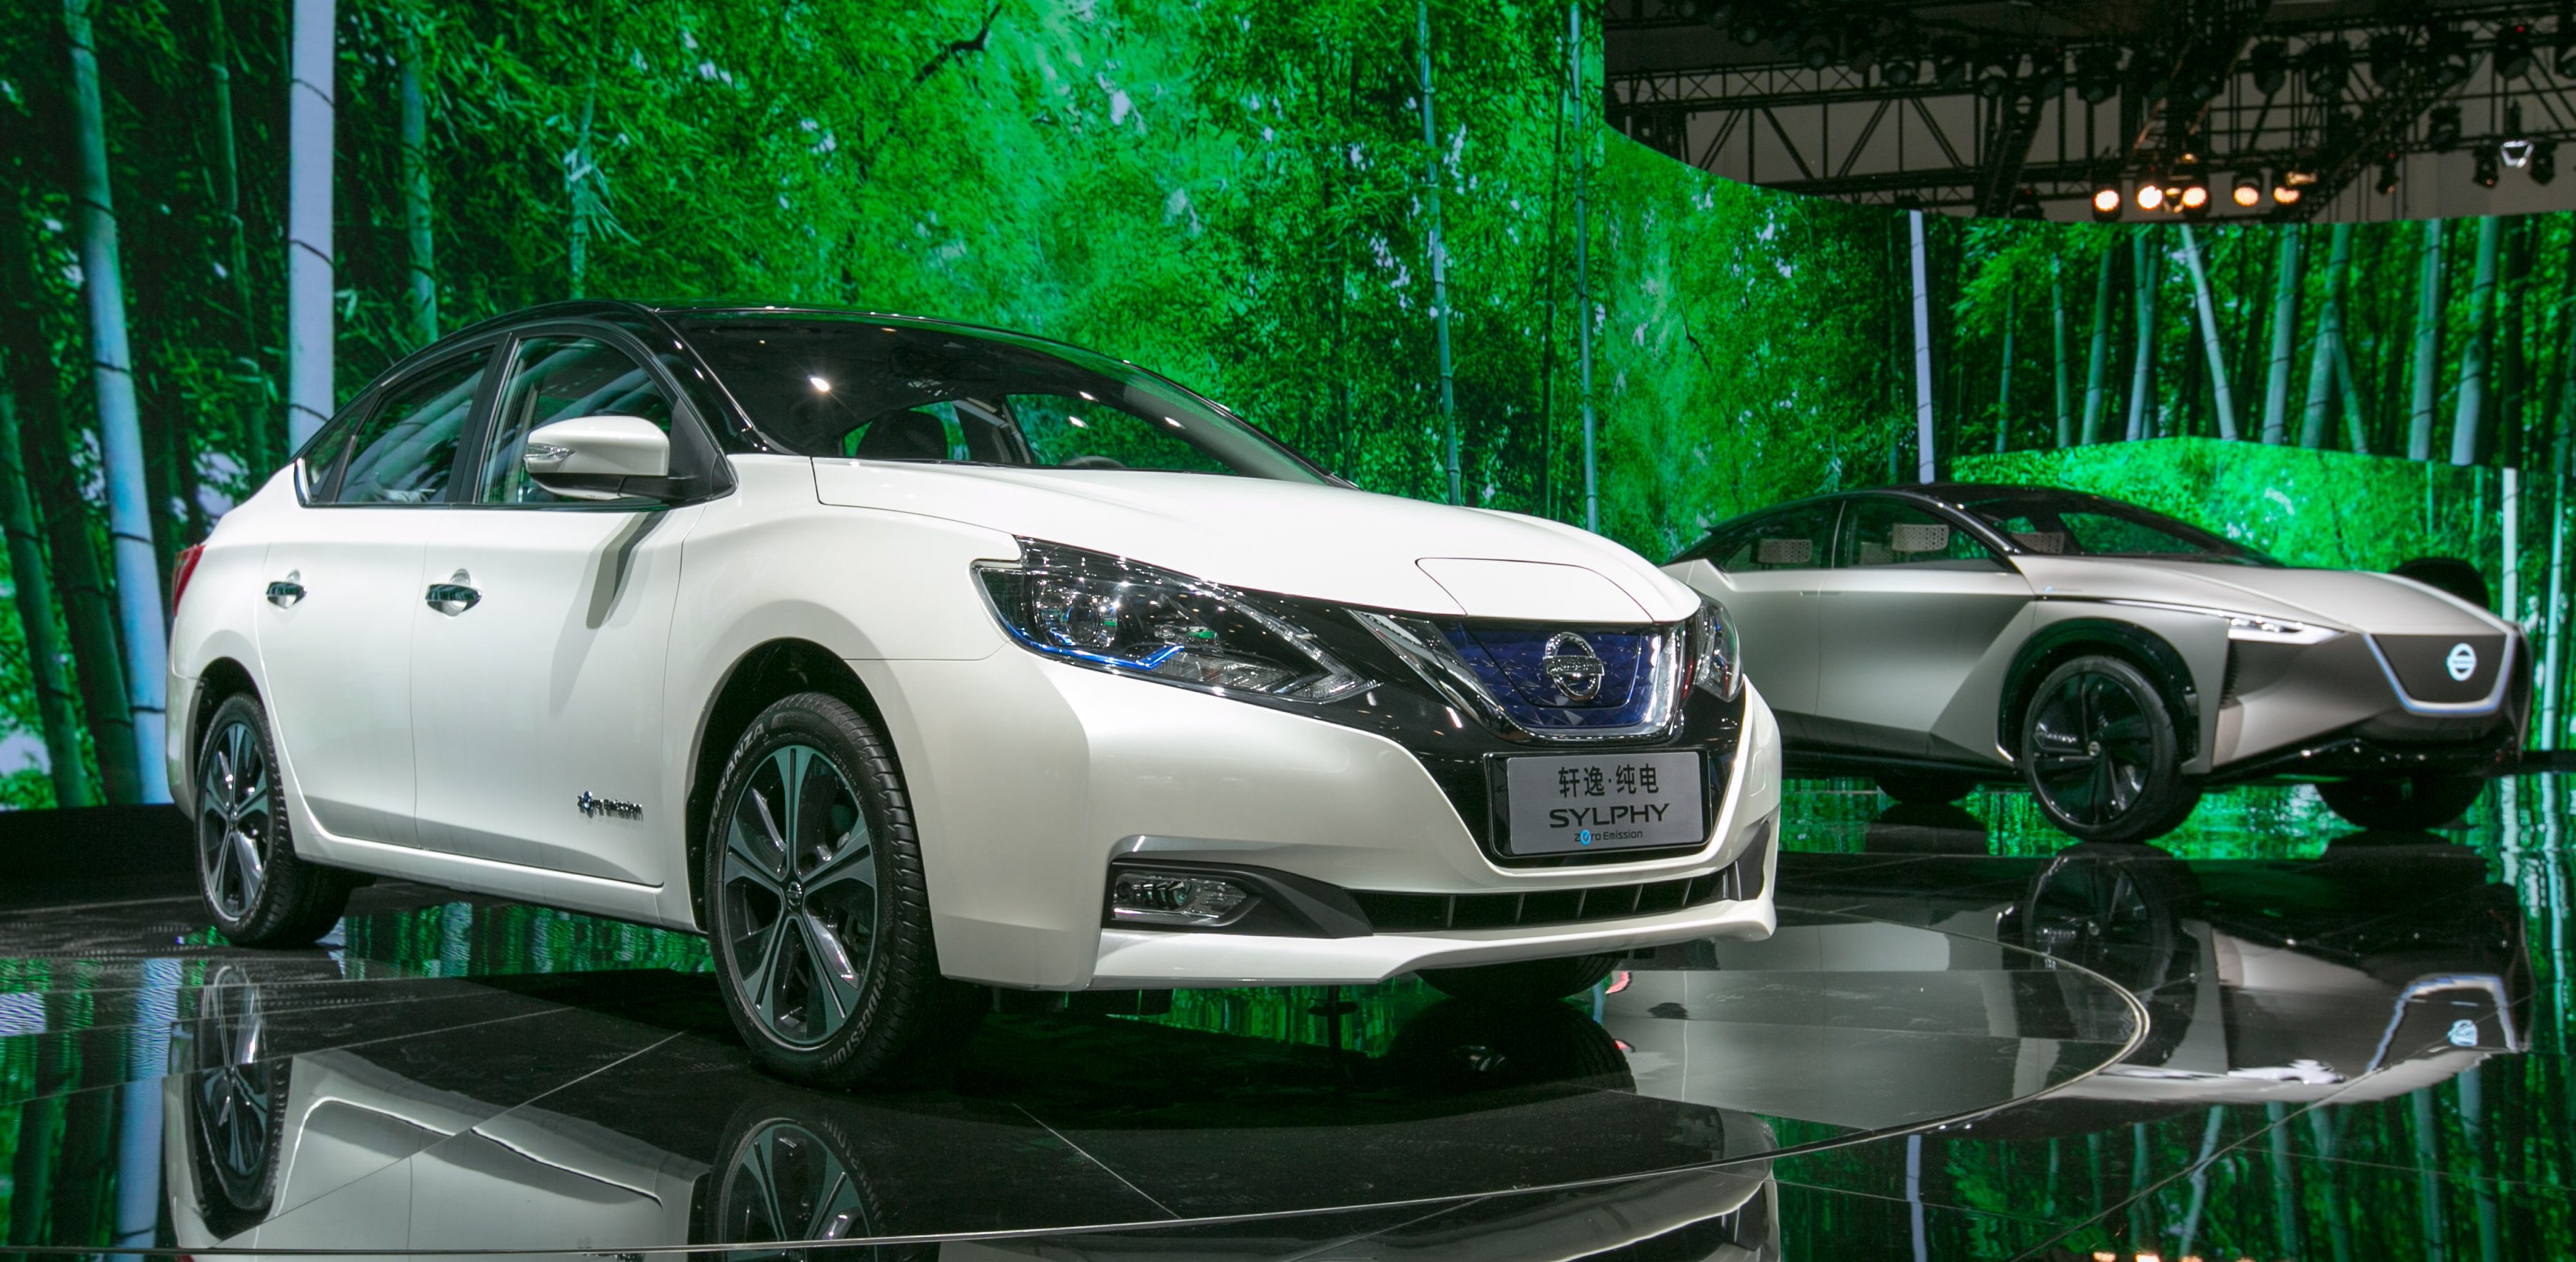 hybrid electric vehicle